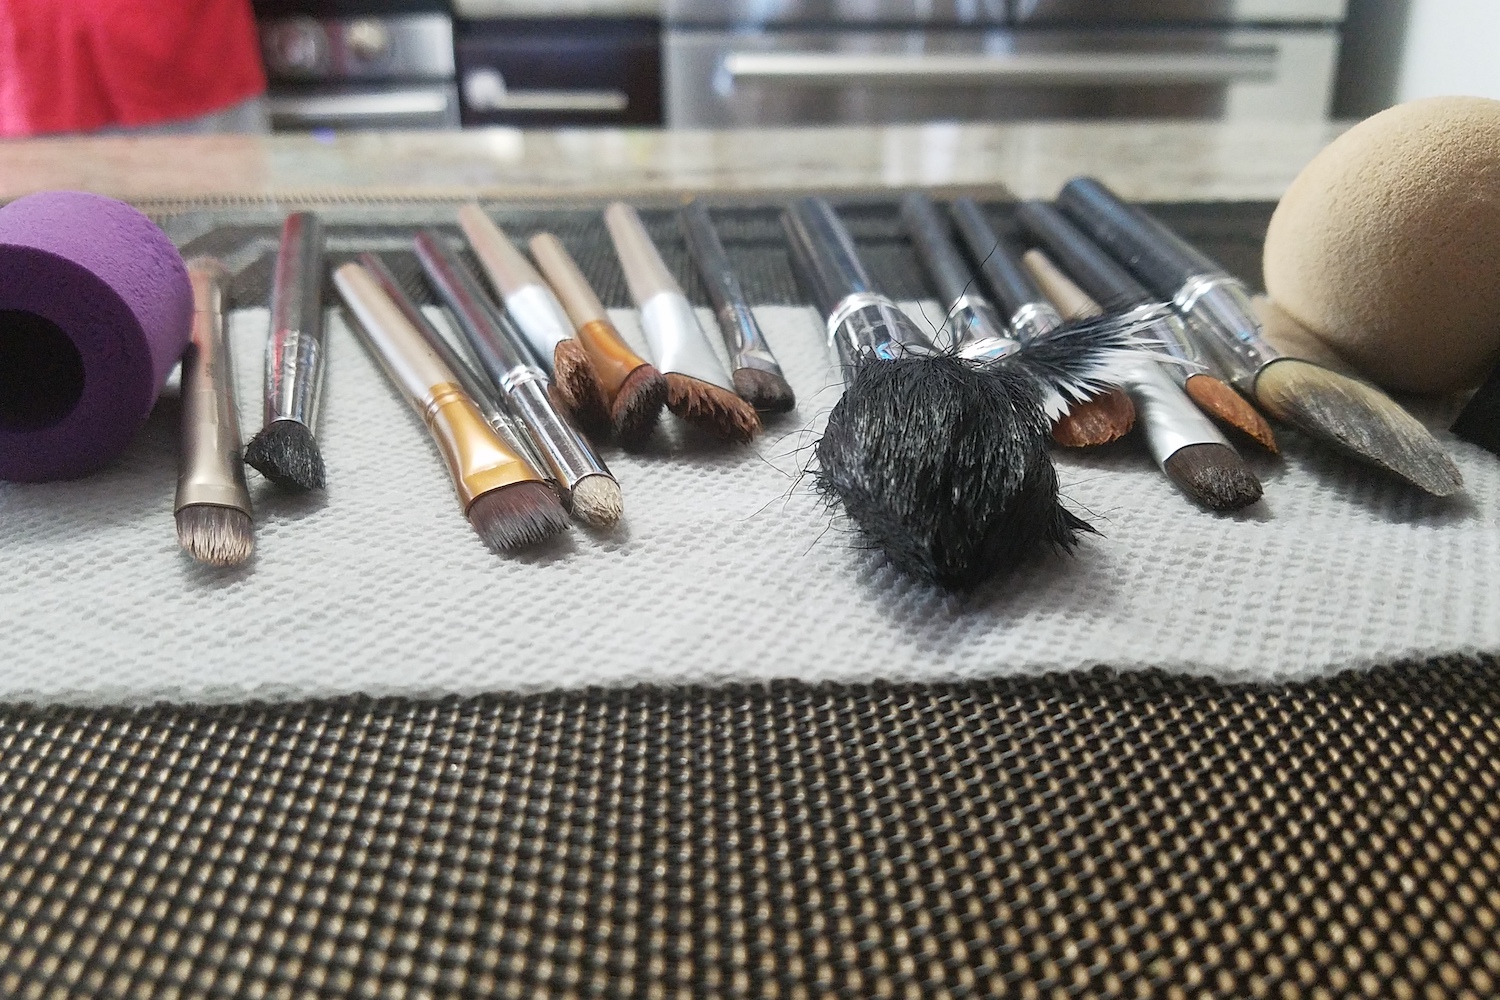 https://www.womansworld.com/wp-content/uploads/2019/10/best-makeup-brushes.jpg